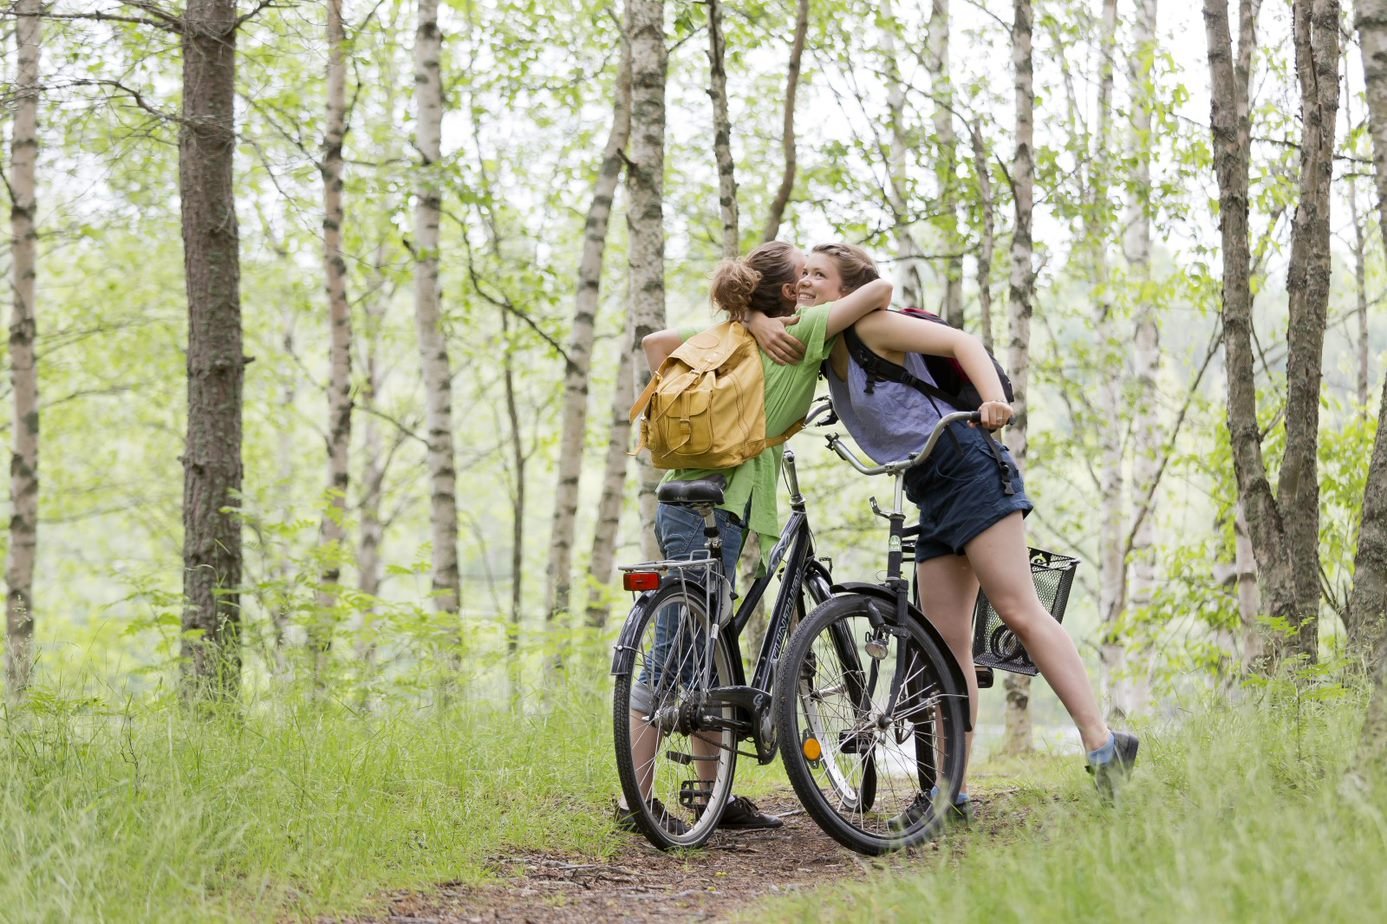 Bring a friend on a pleasant bike ride.